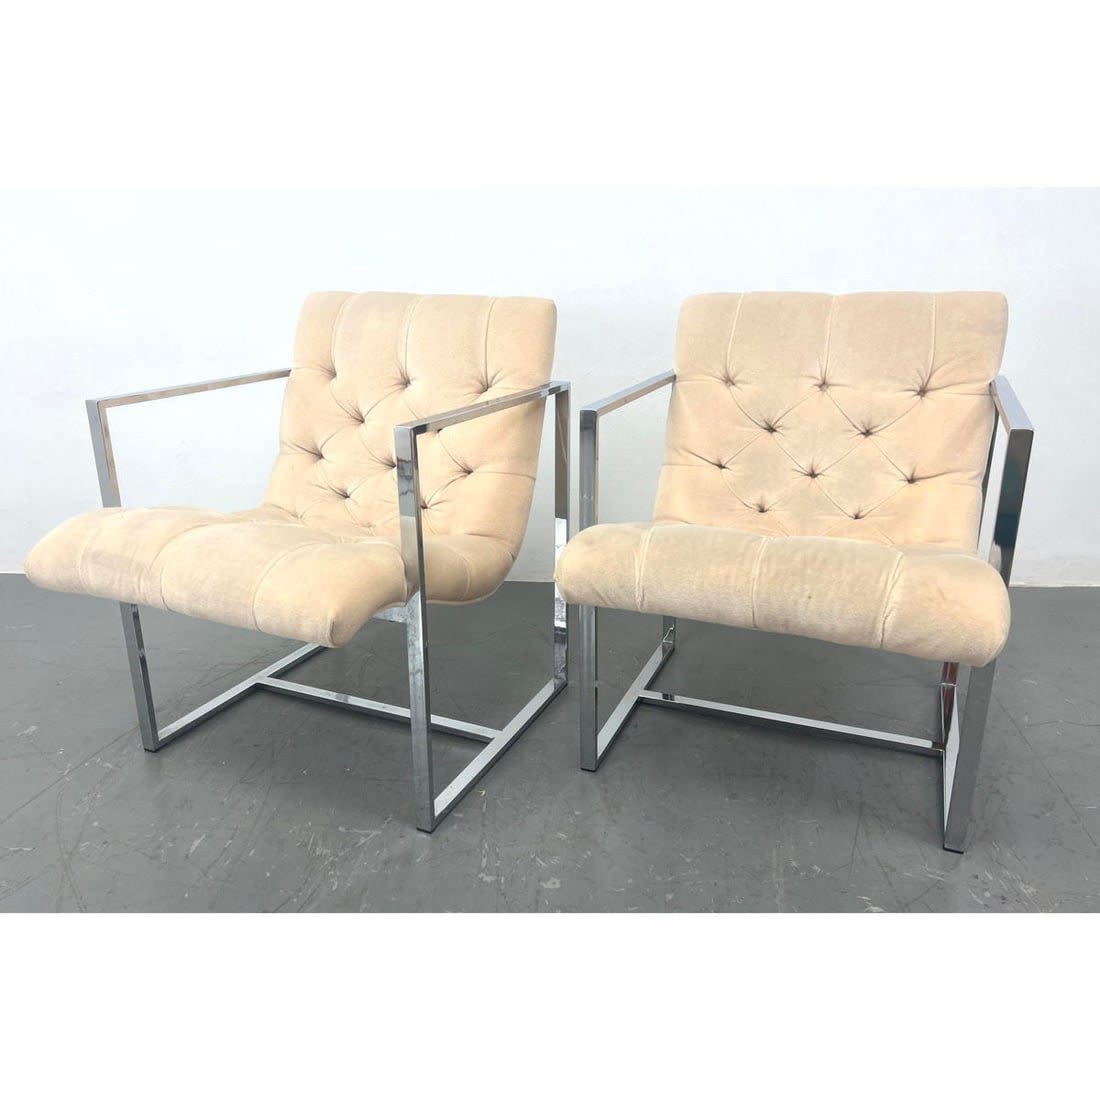 Pr Milo Baughman Style Lounge Chairs.